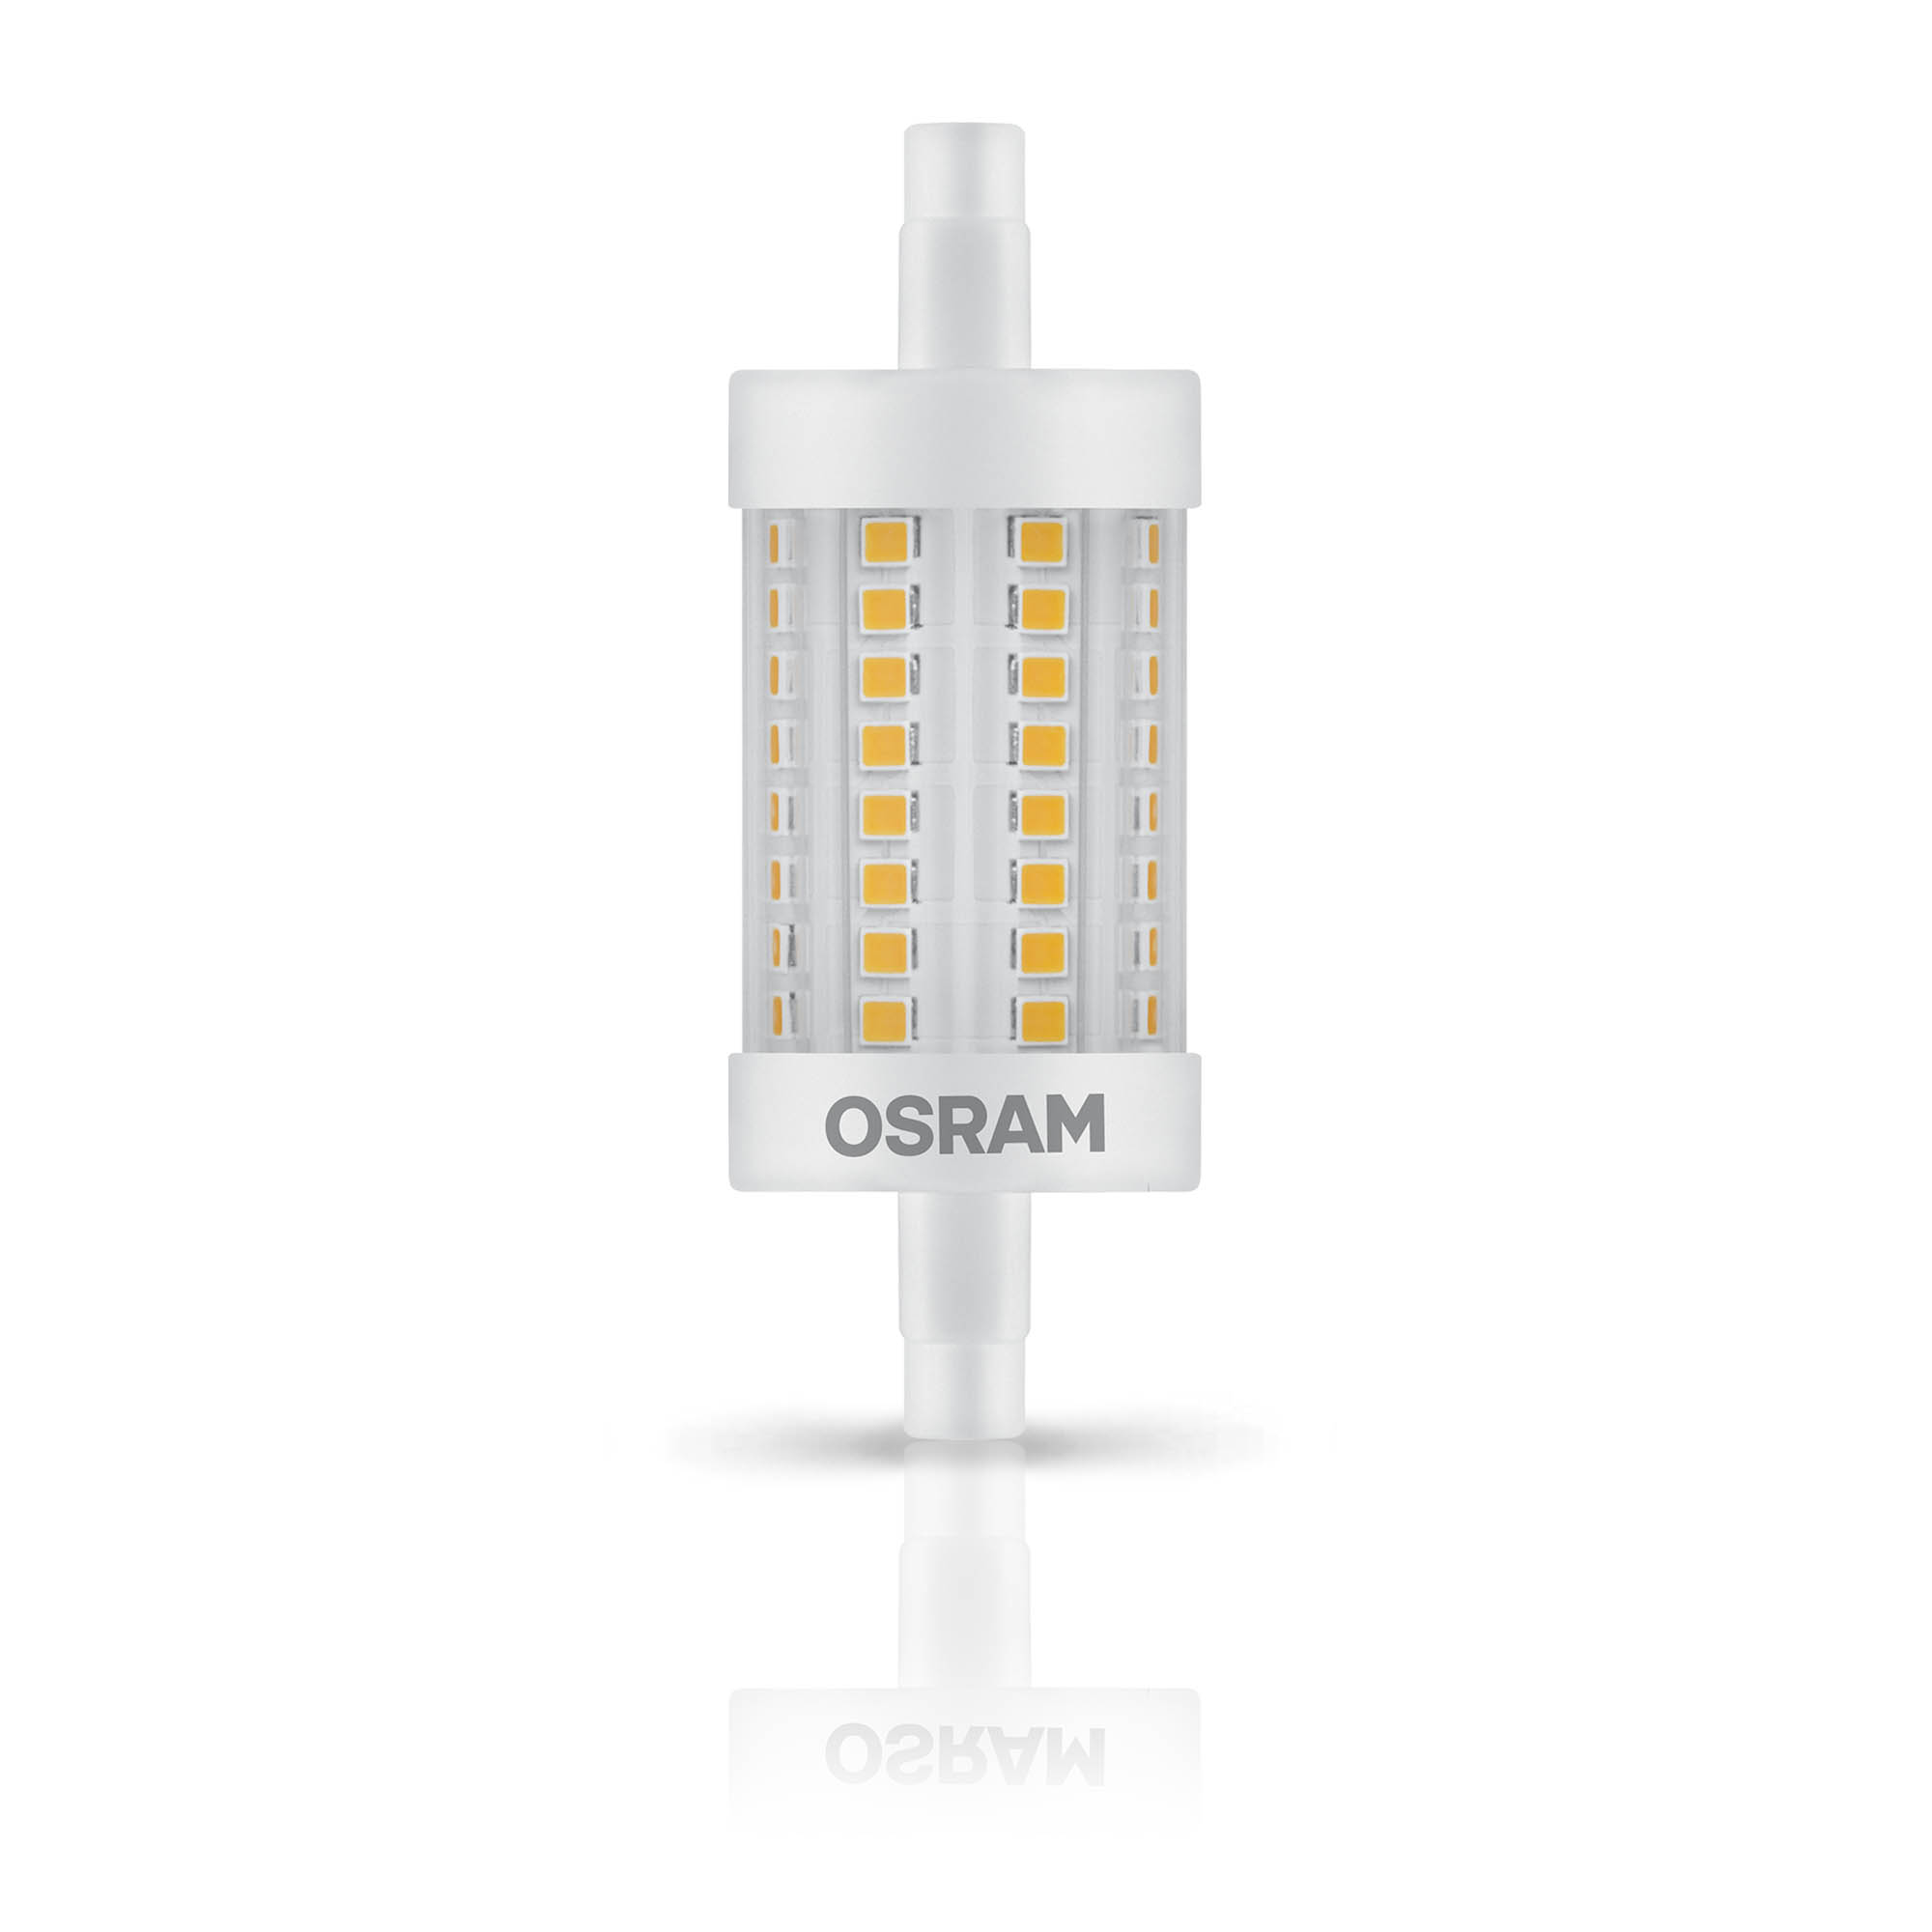 Osram LED STAR  LINE 78  HS 75 non-dim 8W 827 R7S 78mm 1055lm 2700K